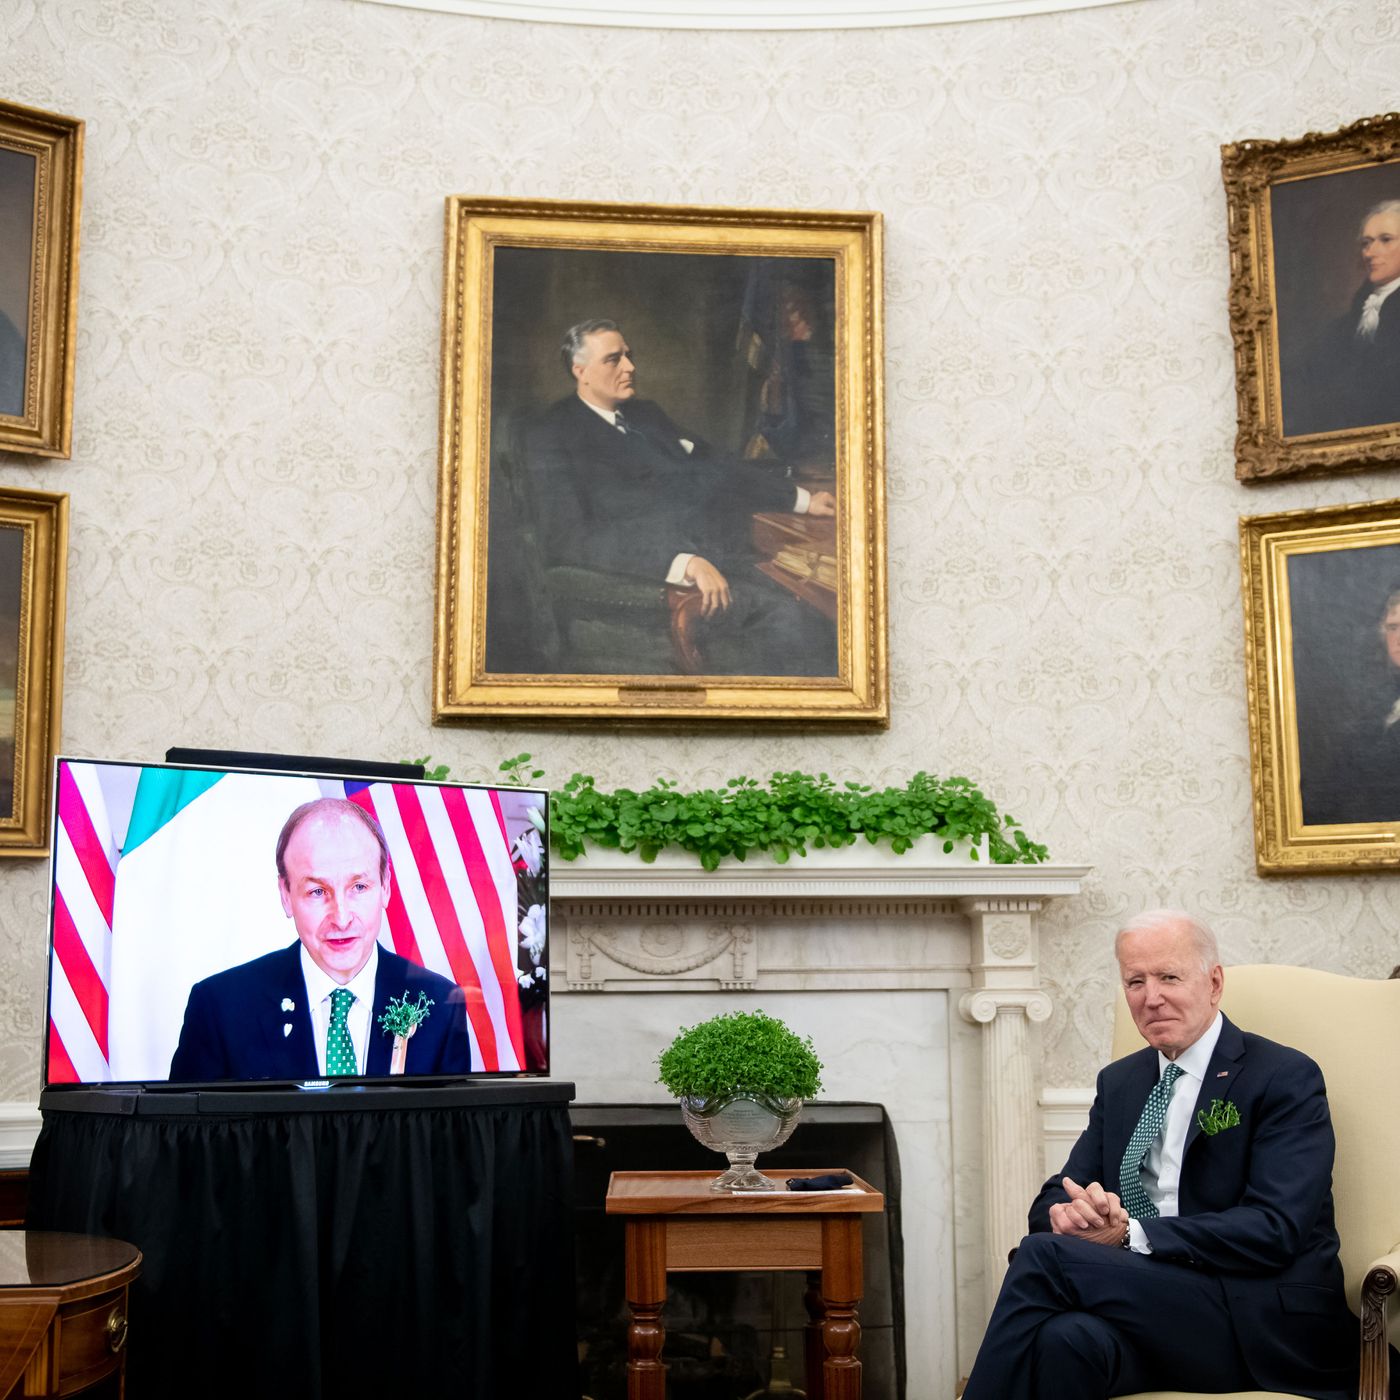 Hold On — Joe Biden Has a TV Hidden in the Oval Office?